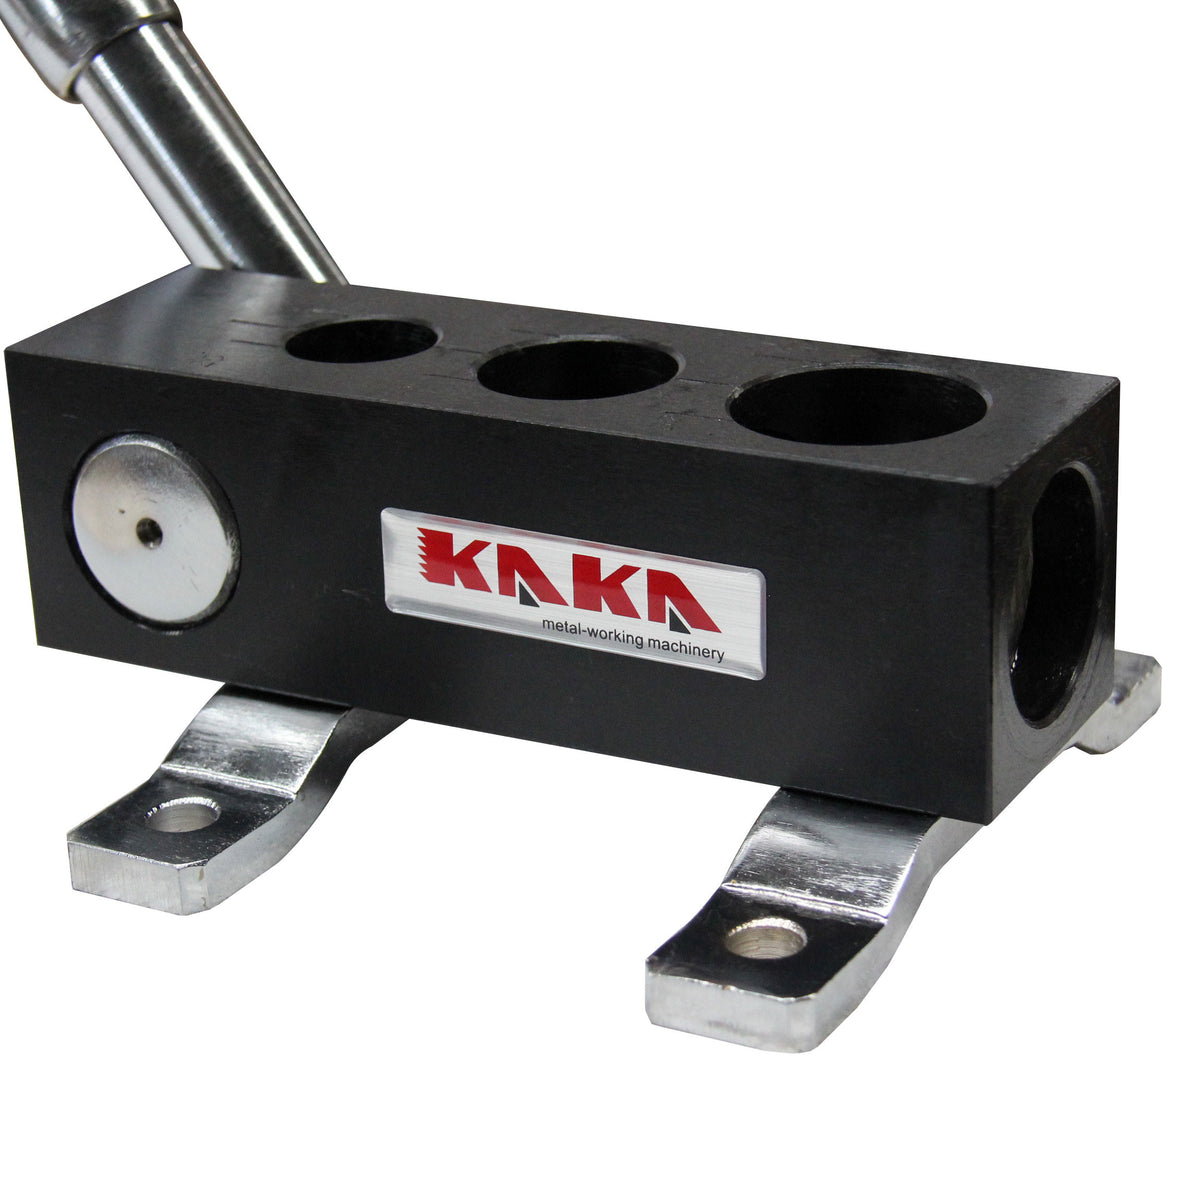 SKA-76 Pipe - Tube and Profile Notching Machine / Abrasive Tube Notcher